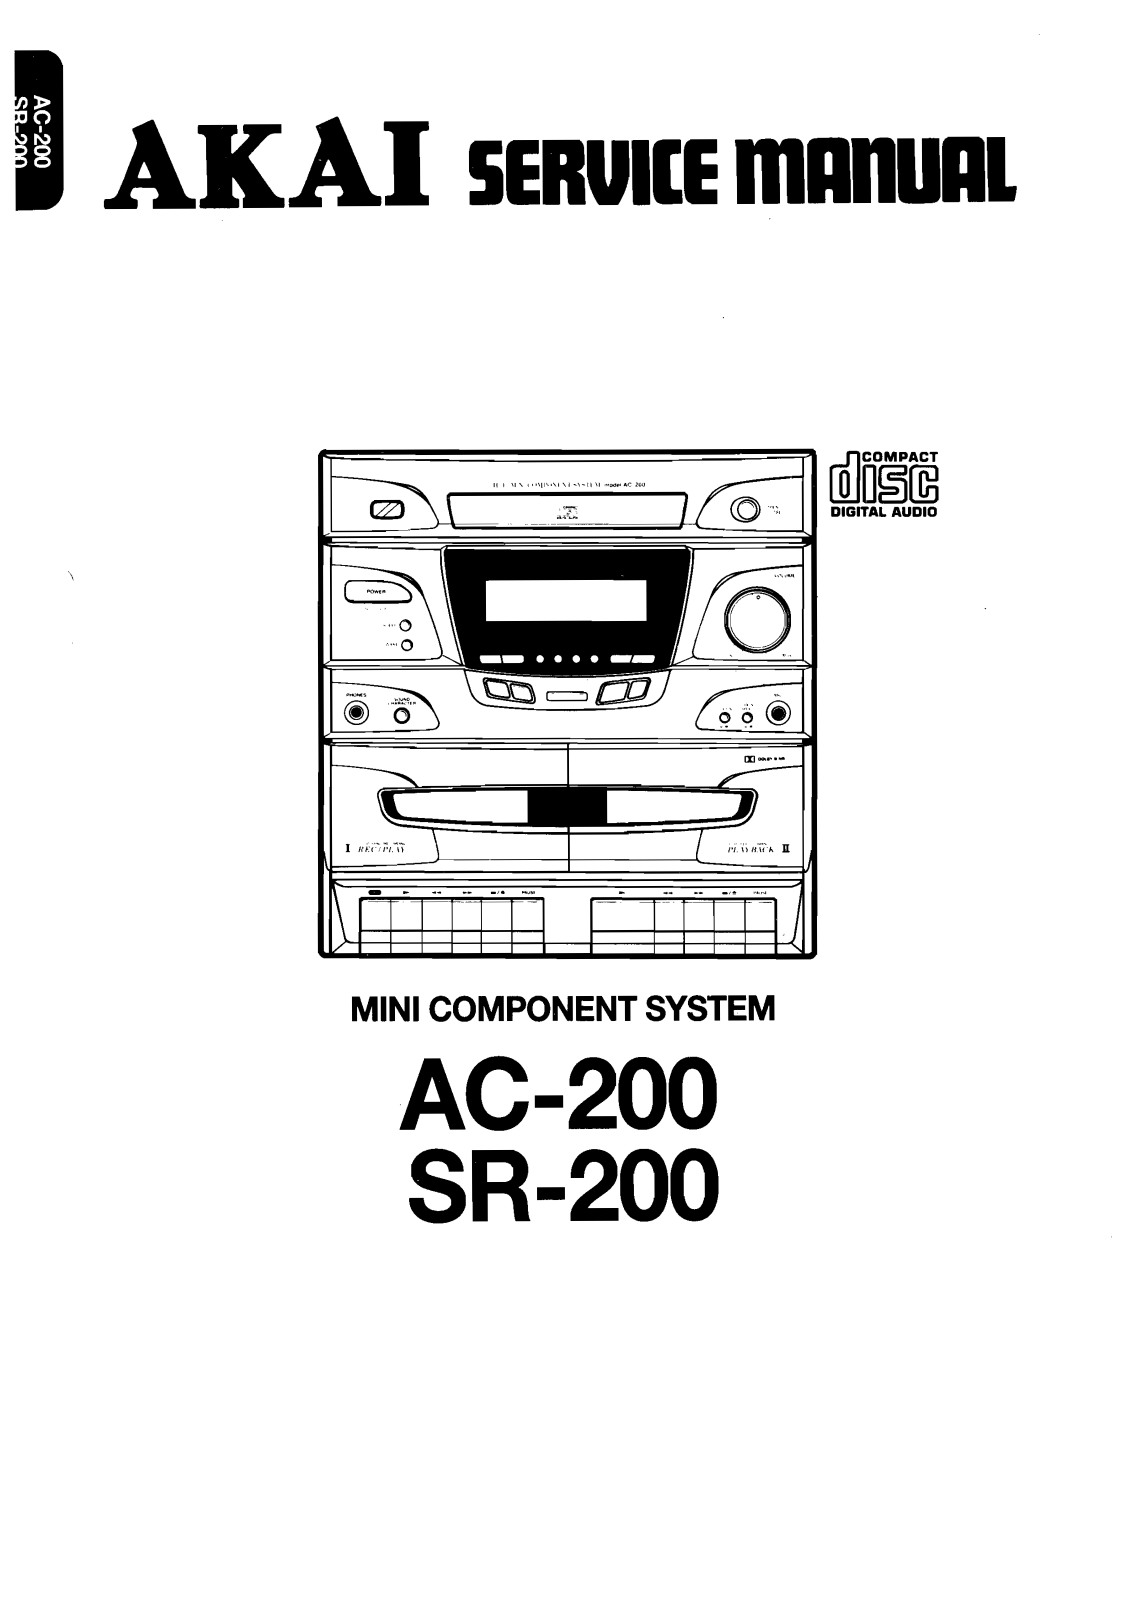 Akai AC-200 Service Manual